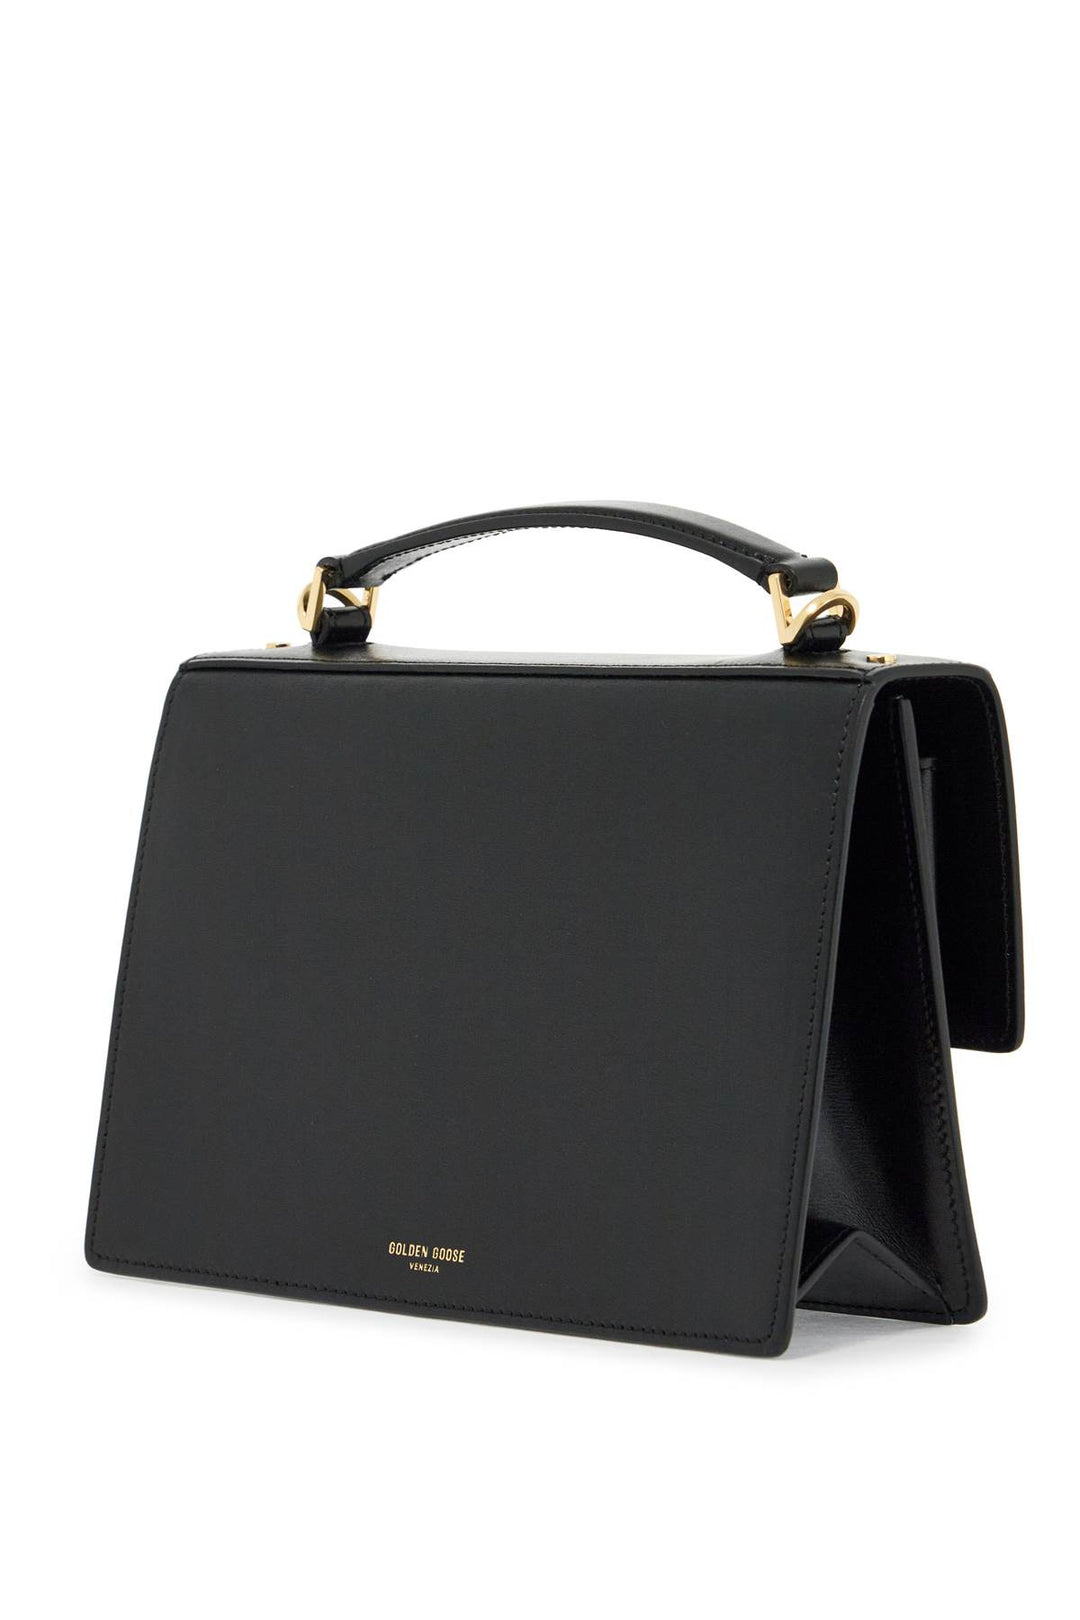 Golden Goose Venice Leather Handbag With Palmell   Black